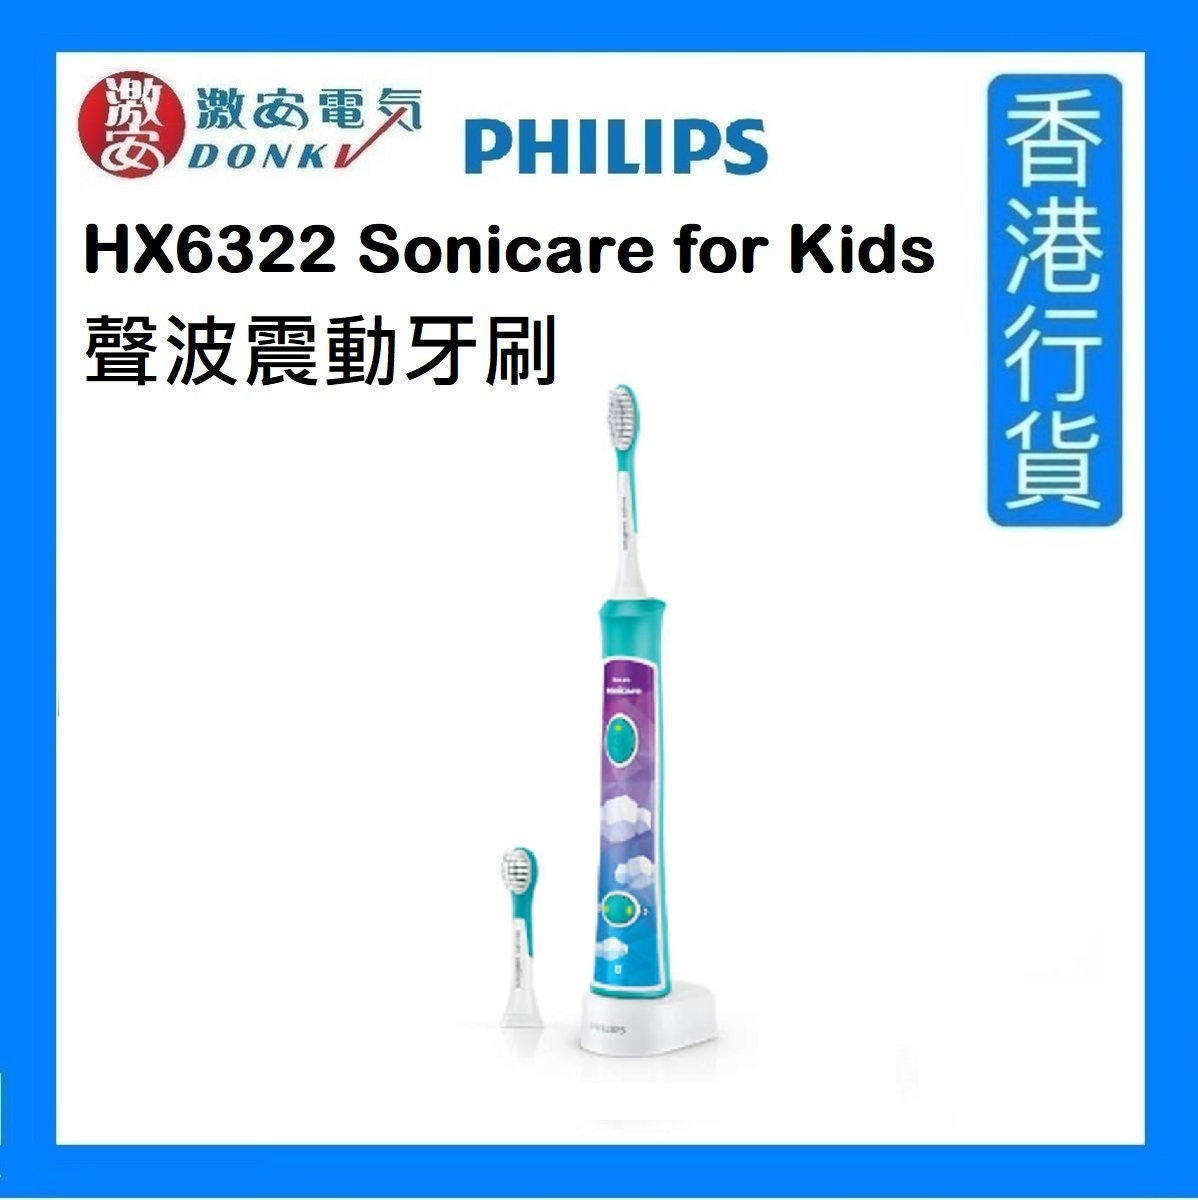 HX6322/04 Sonicare for Kids 聲波震動牙刷 [香港行貨]